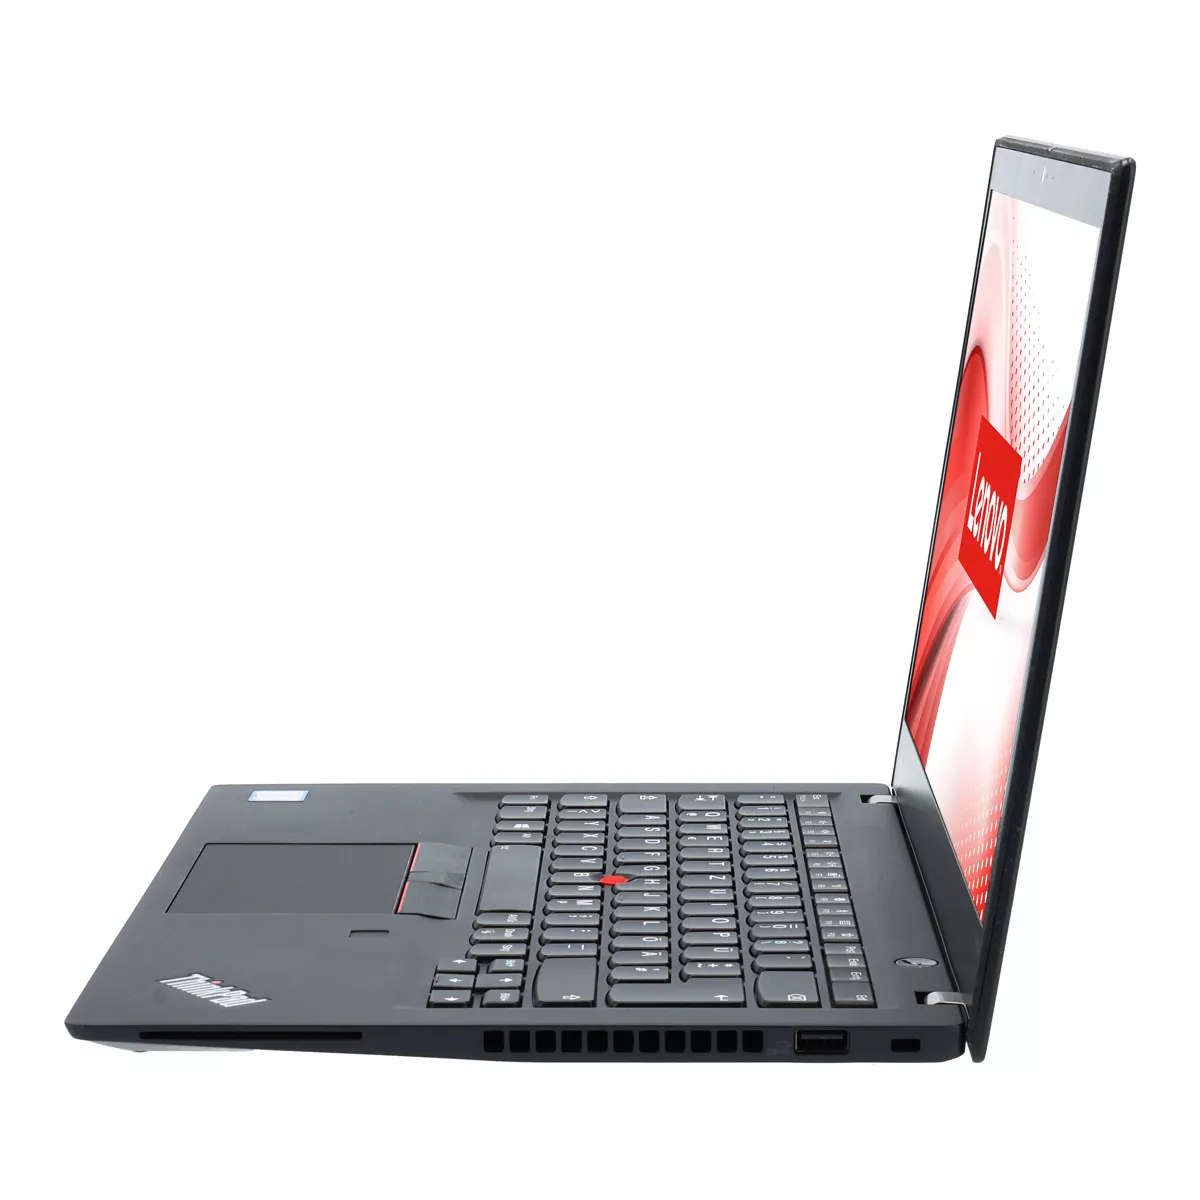 Lenovo ThinkPad T495 AMD Ryzen 5 Pro 3500U Full-HD Touch 500 GB M.2 nVME SSD Webcam B